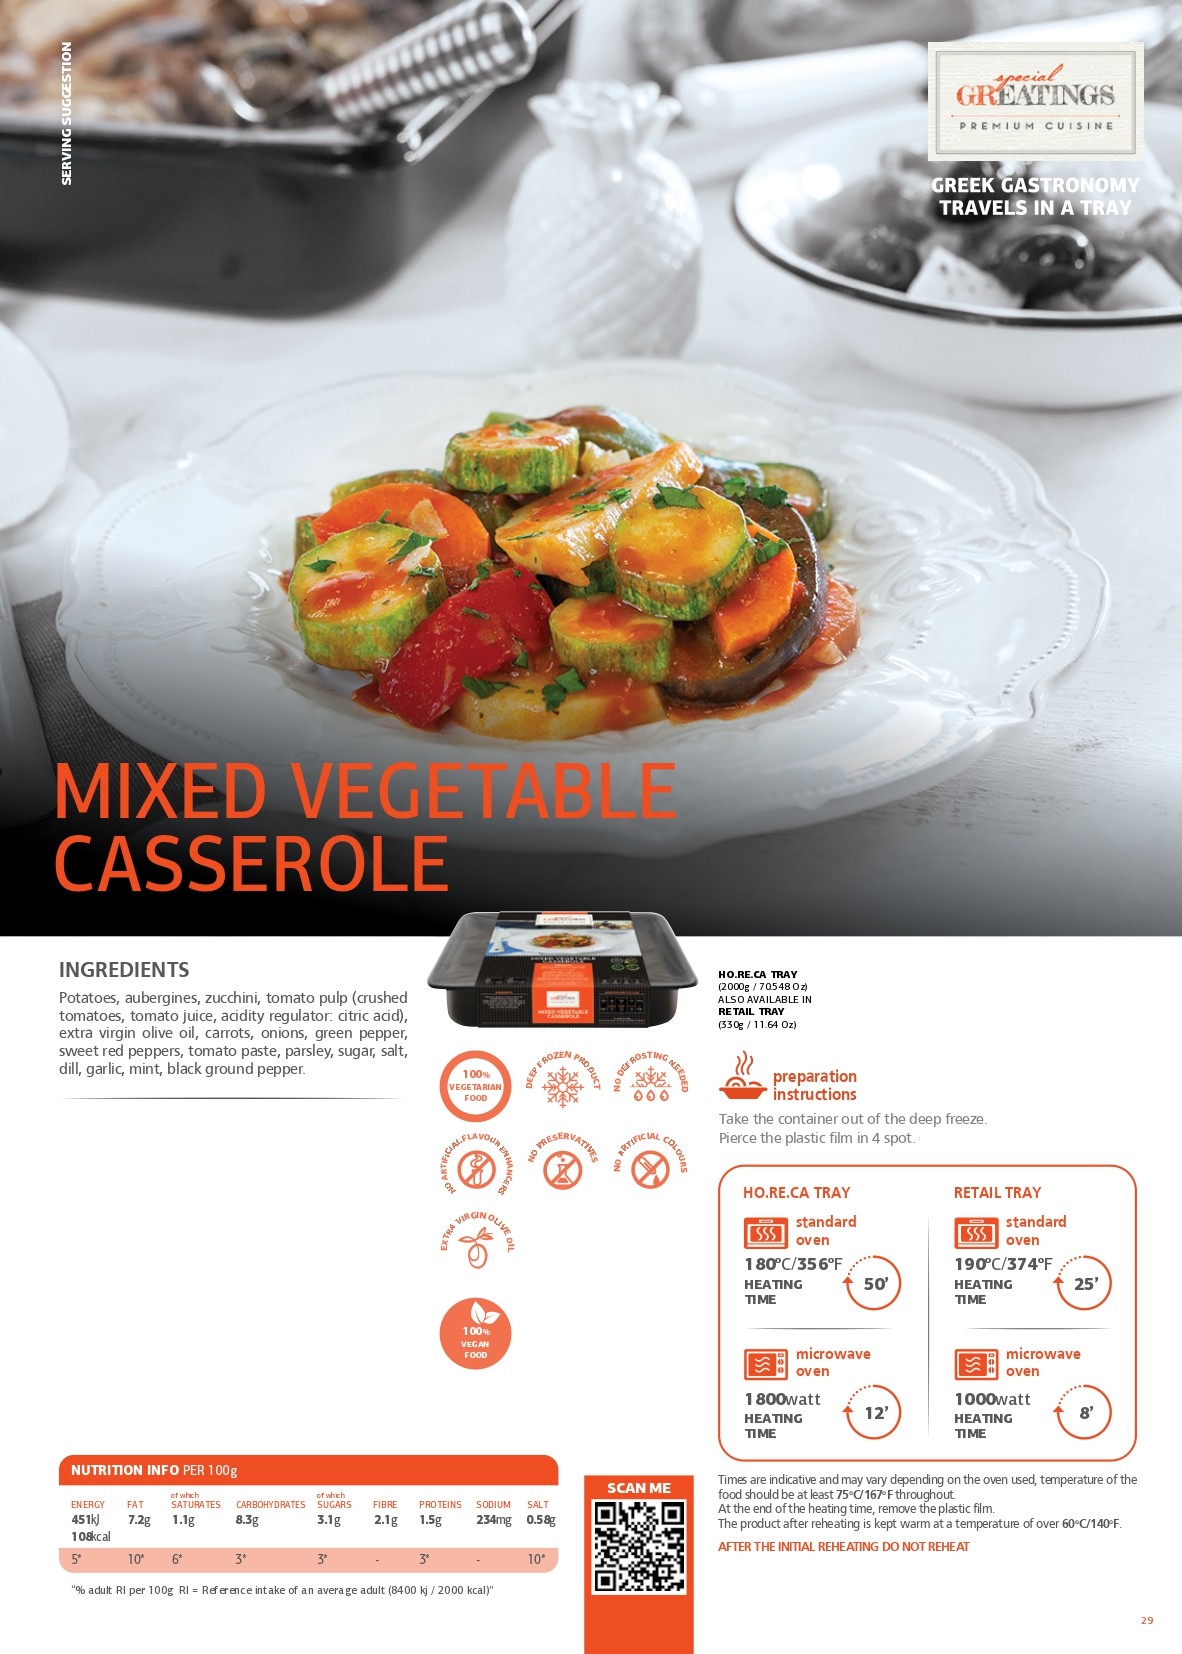 Mixed vegetable casserole pdf image